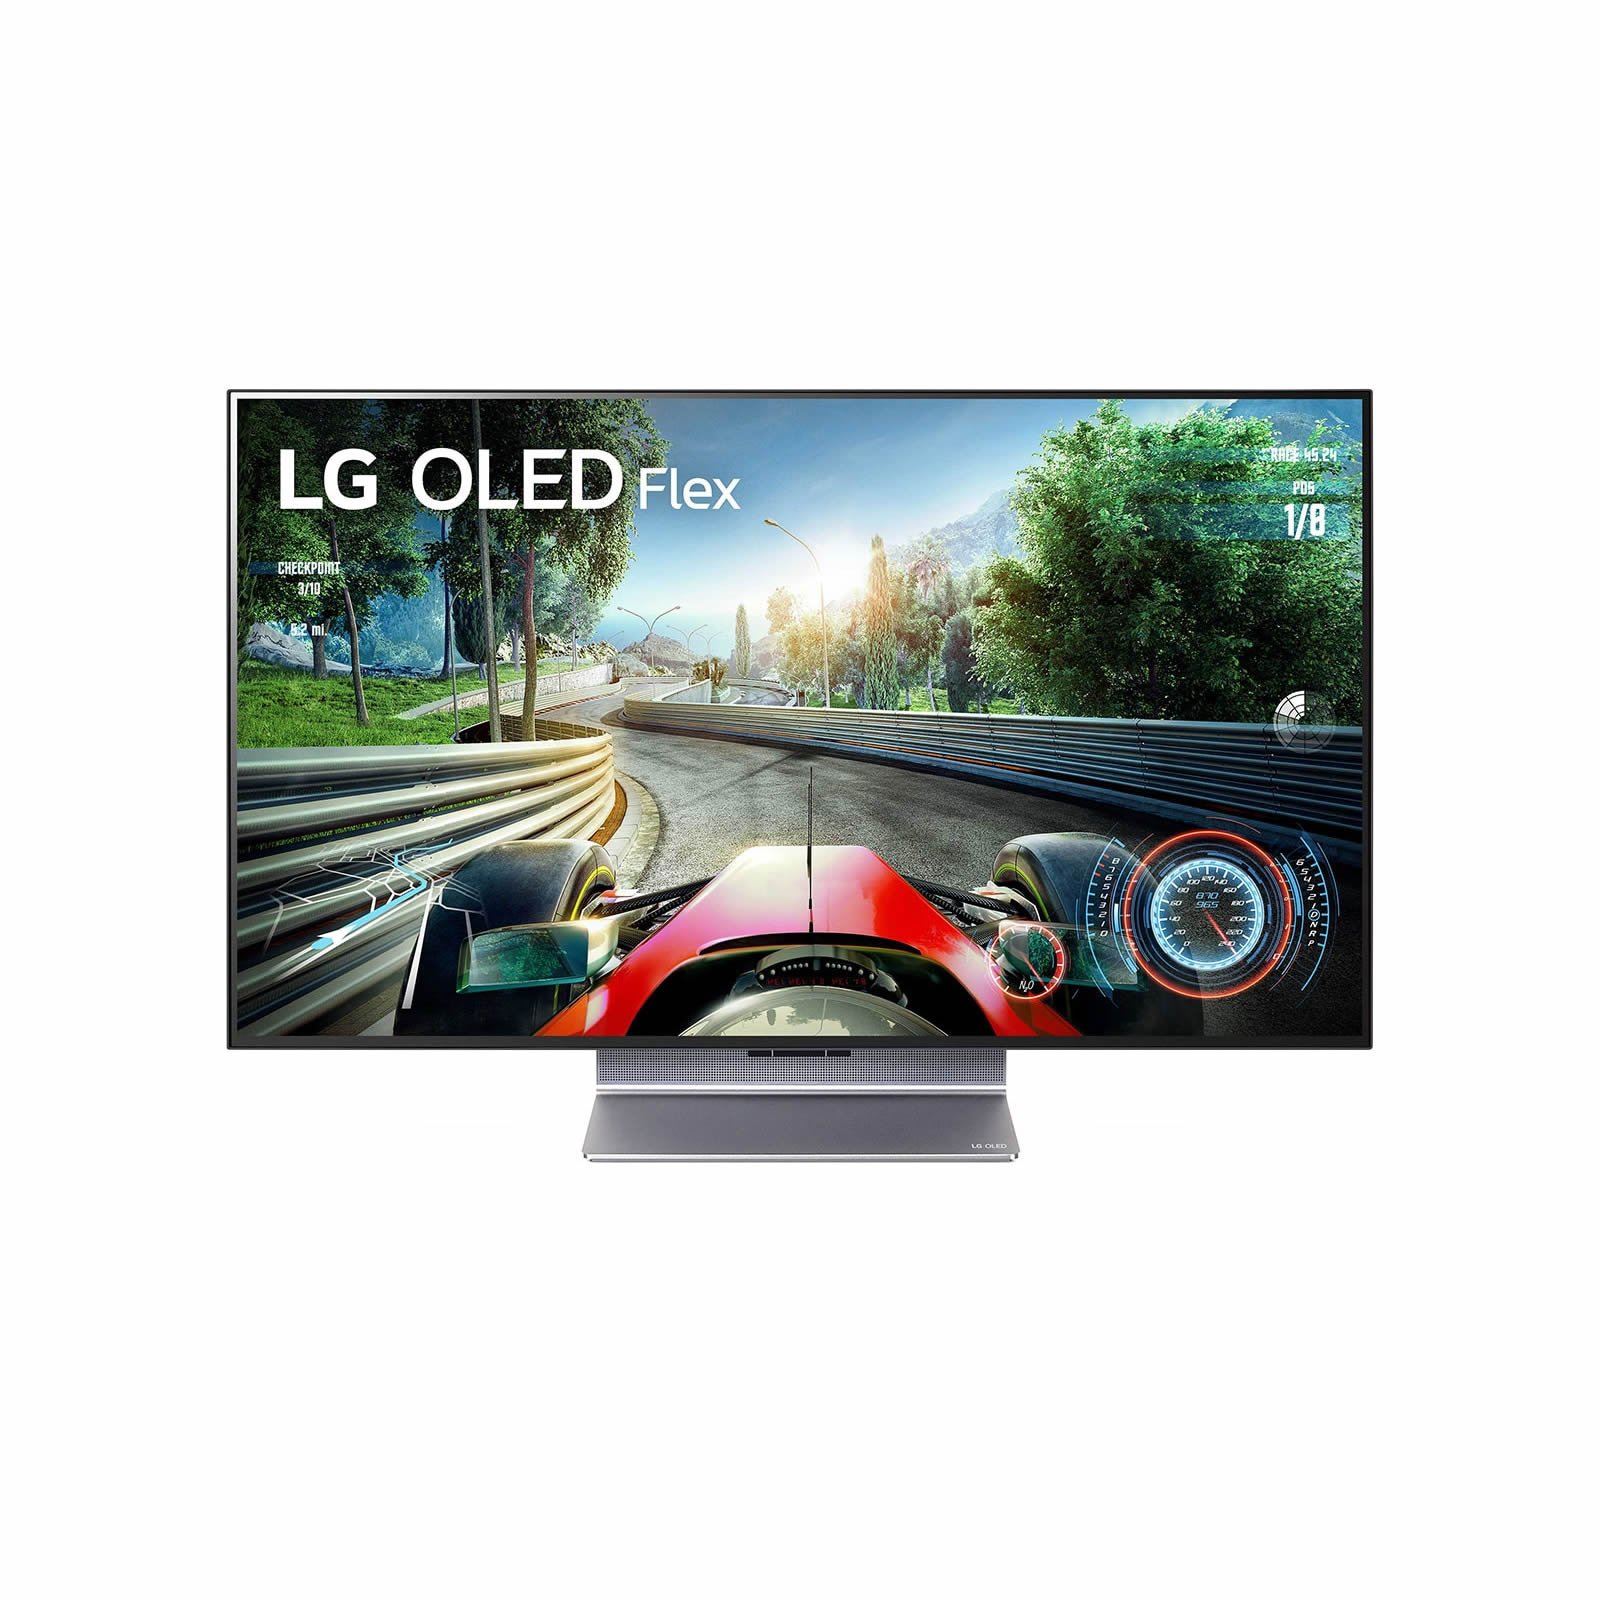 LG 42inch OLED Flex HDR 4K UHD SMART TV WiFi Dolby Atmos